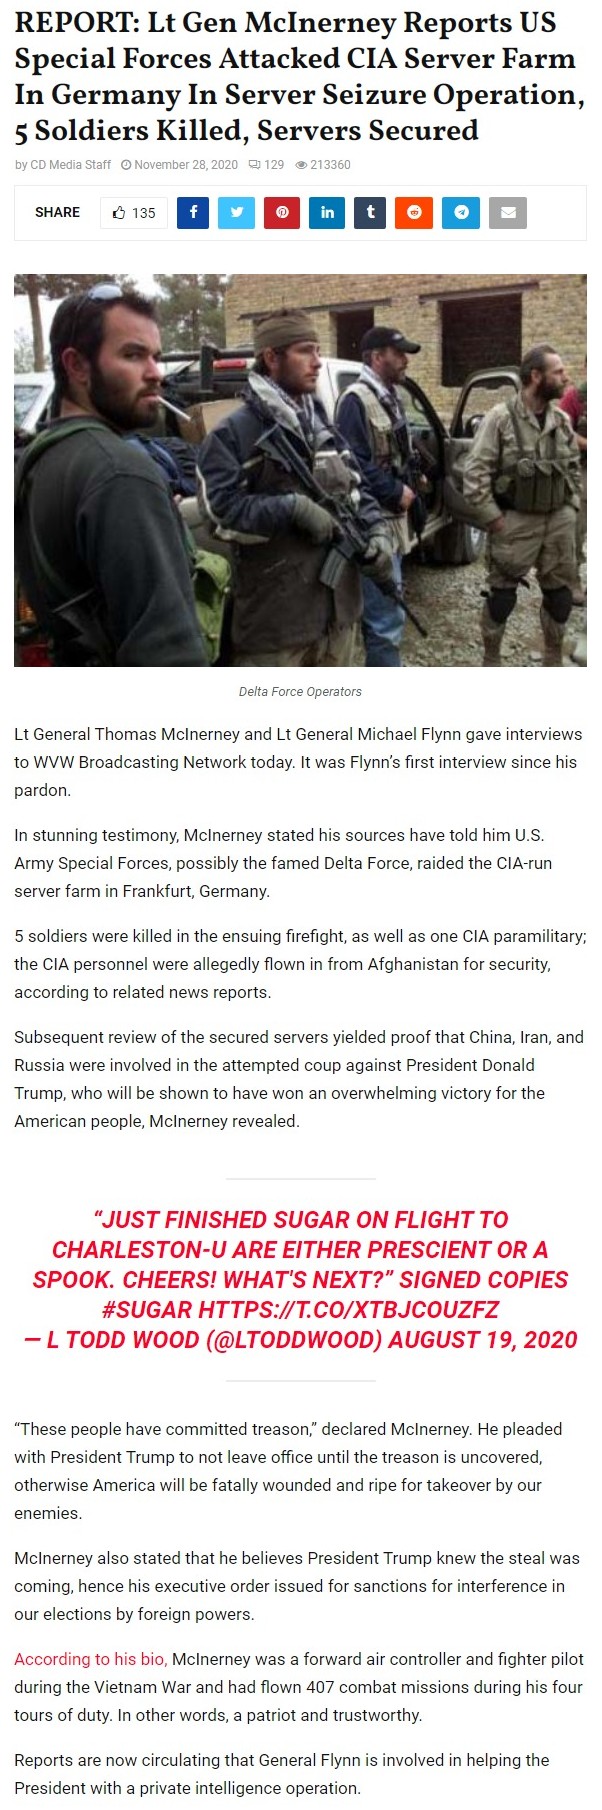 Lt Gen McInerney Reports US Spec